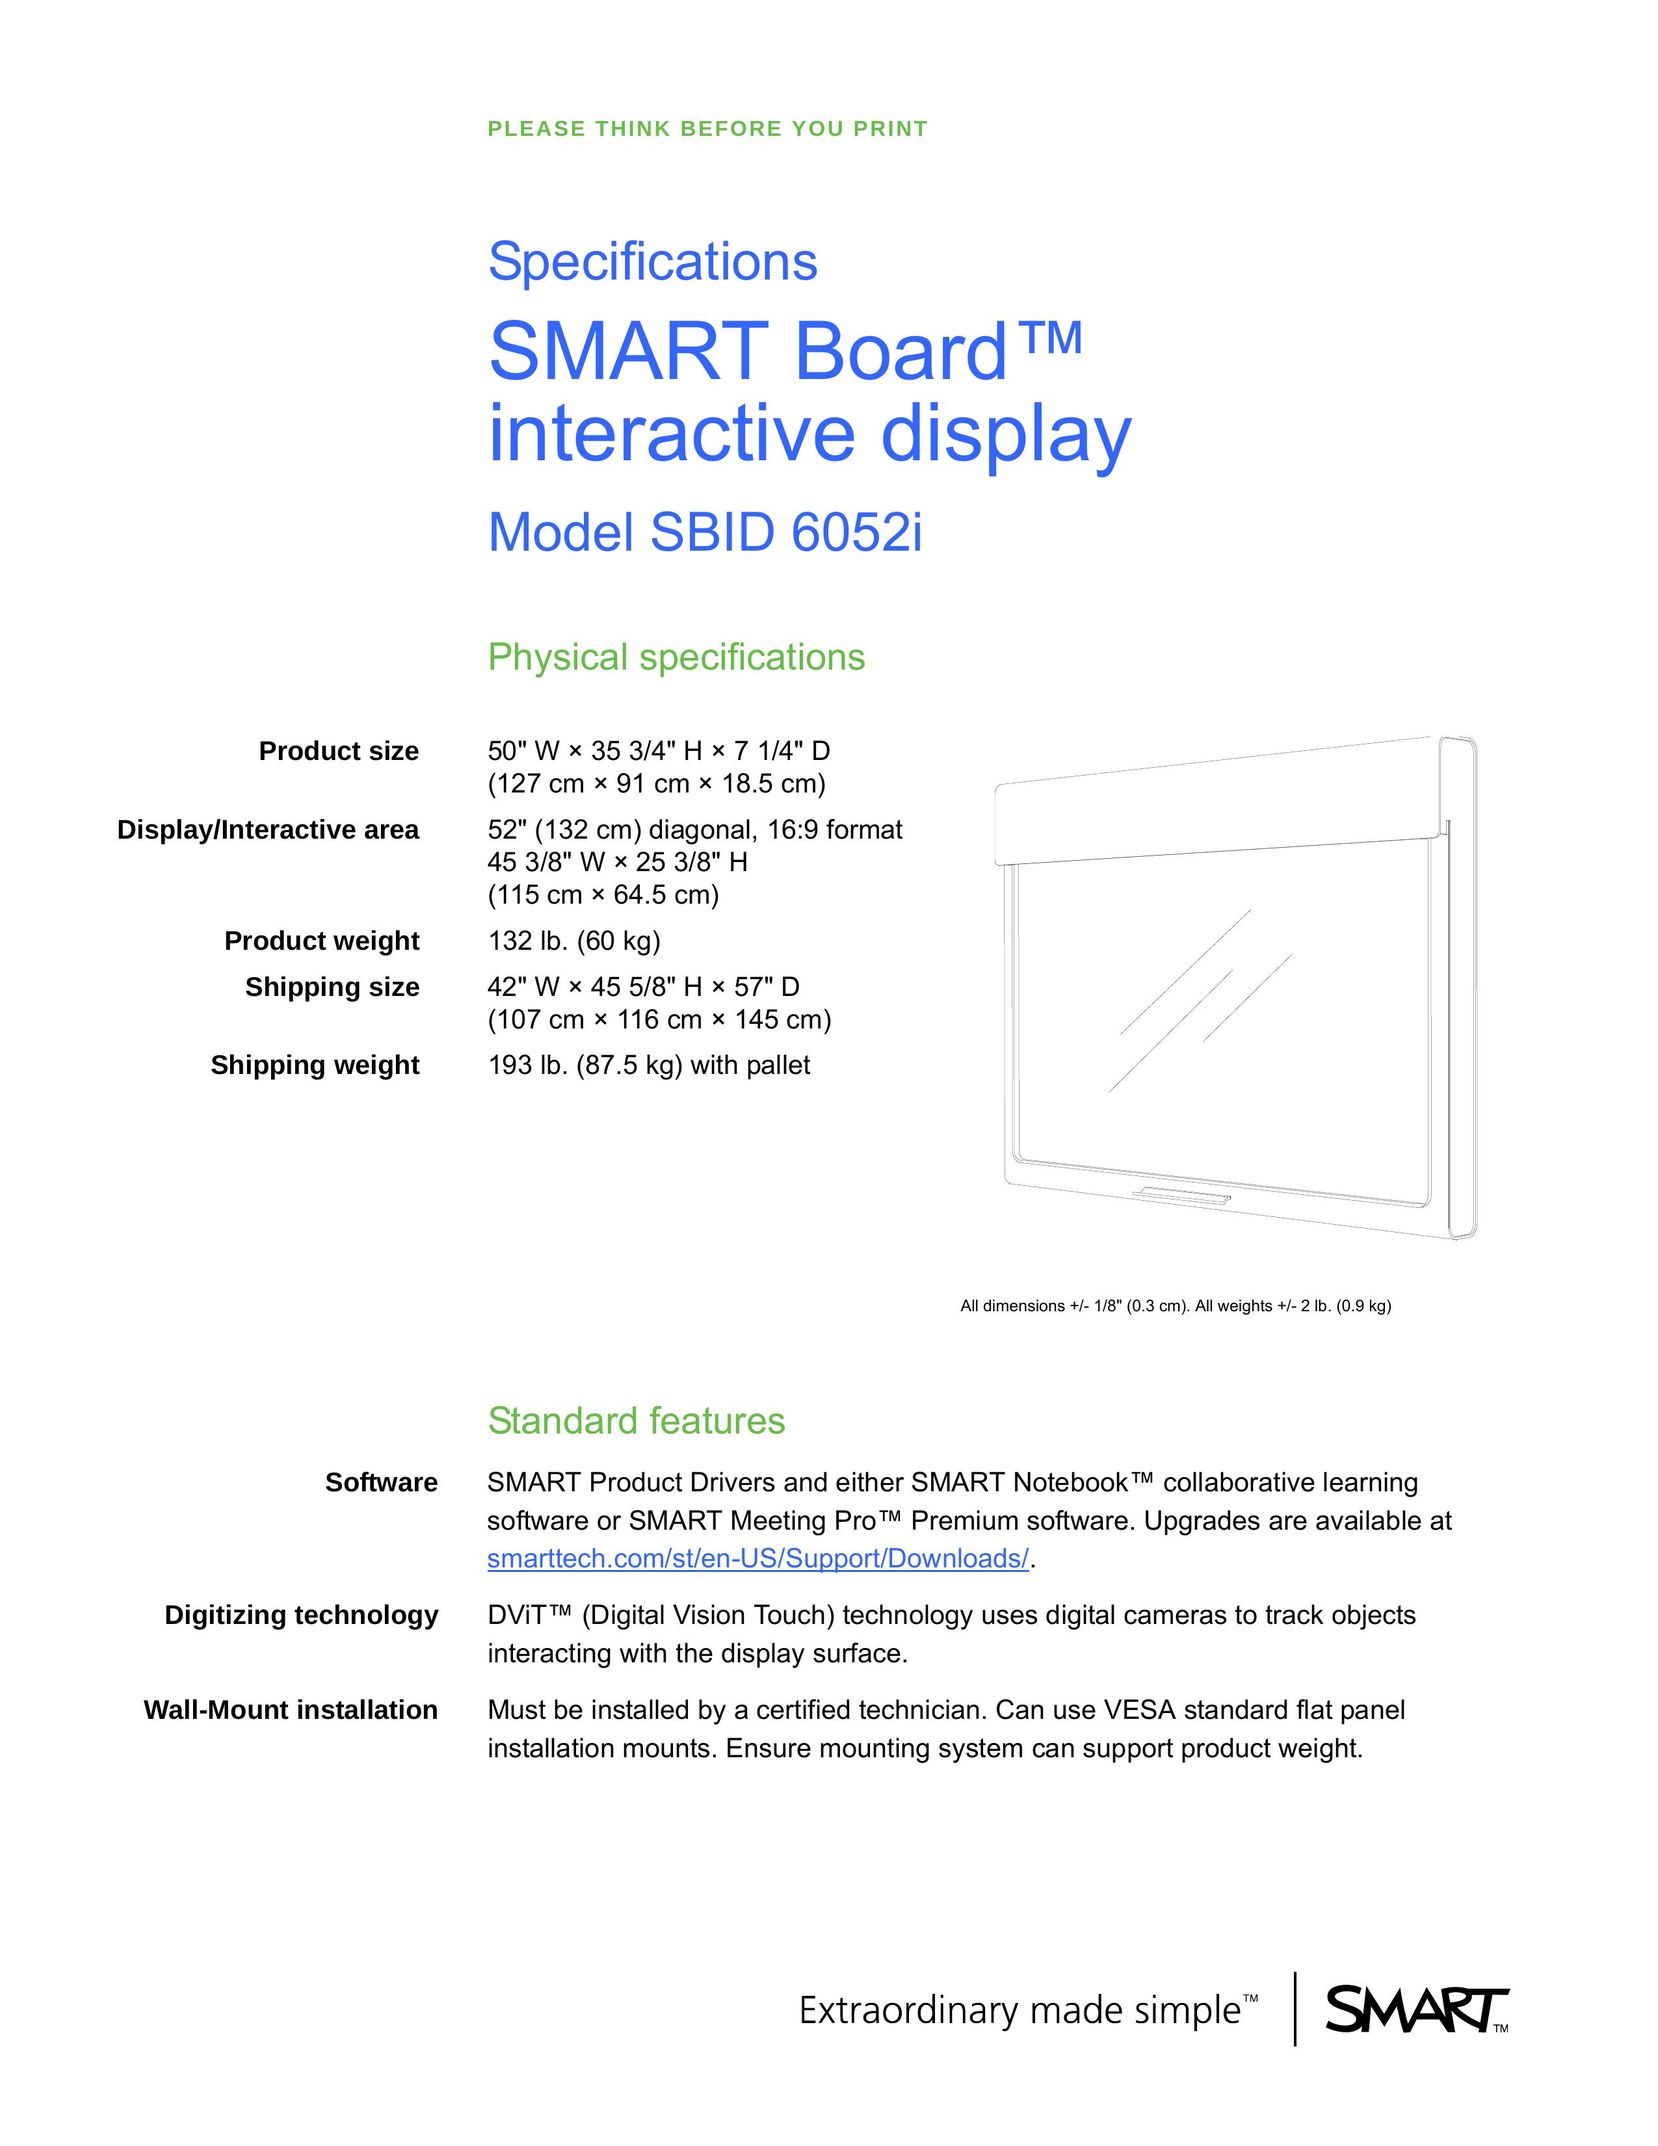 Smart Technologies SBID 6052i Whiteboard Accessories User Manual